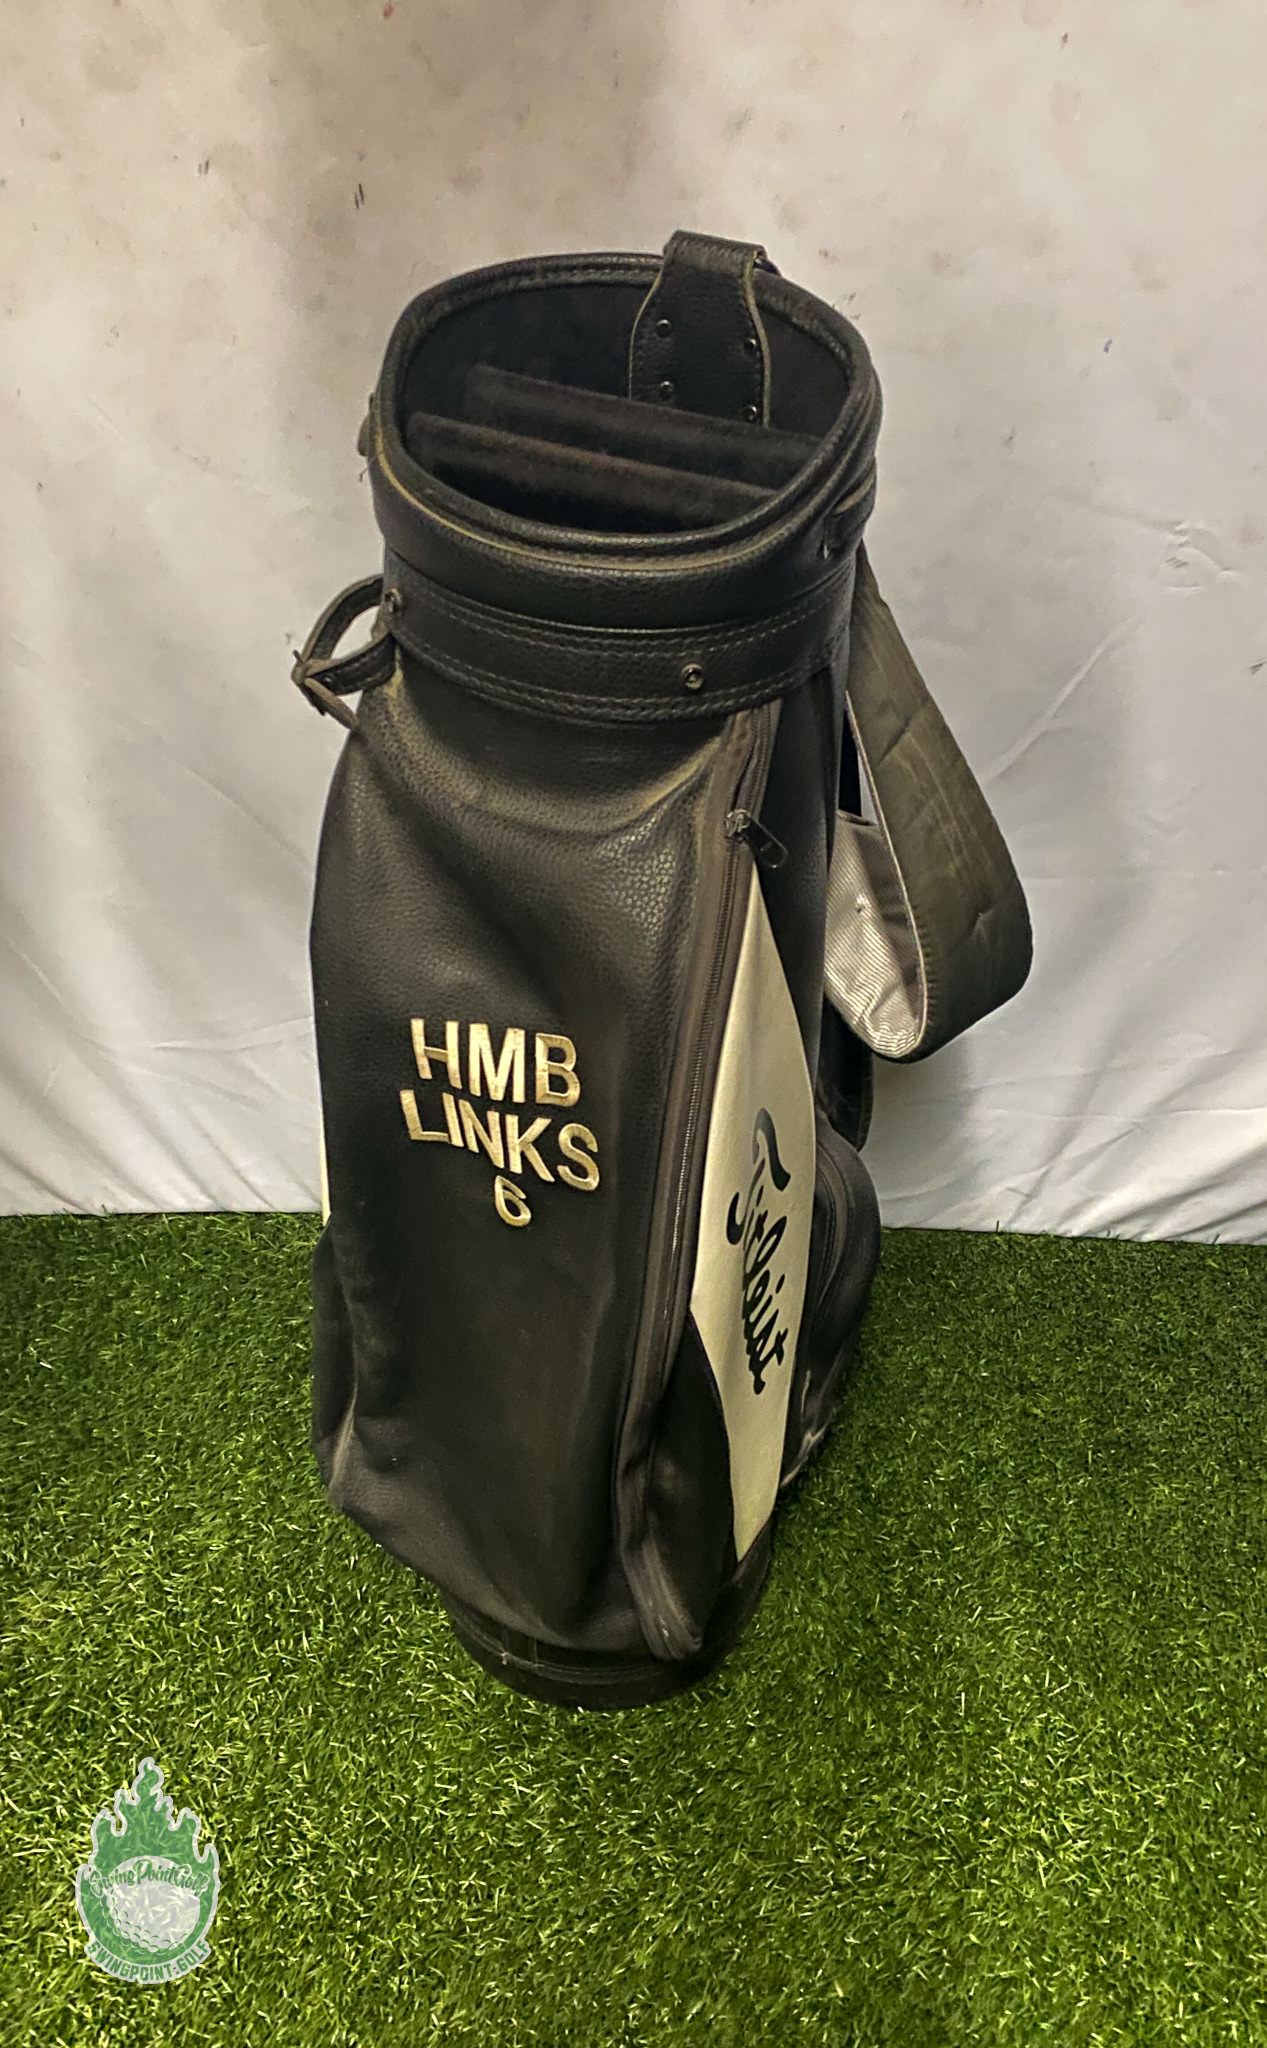 Hermès vintage black golf ball bag - 1990s second hand Lysis